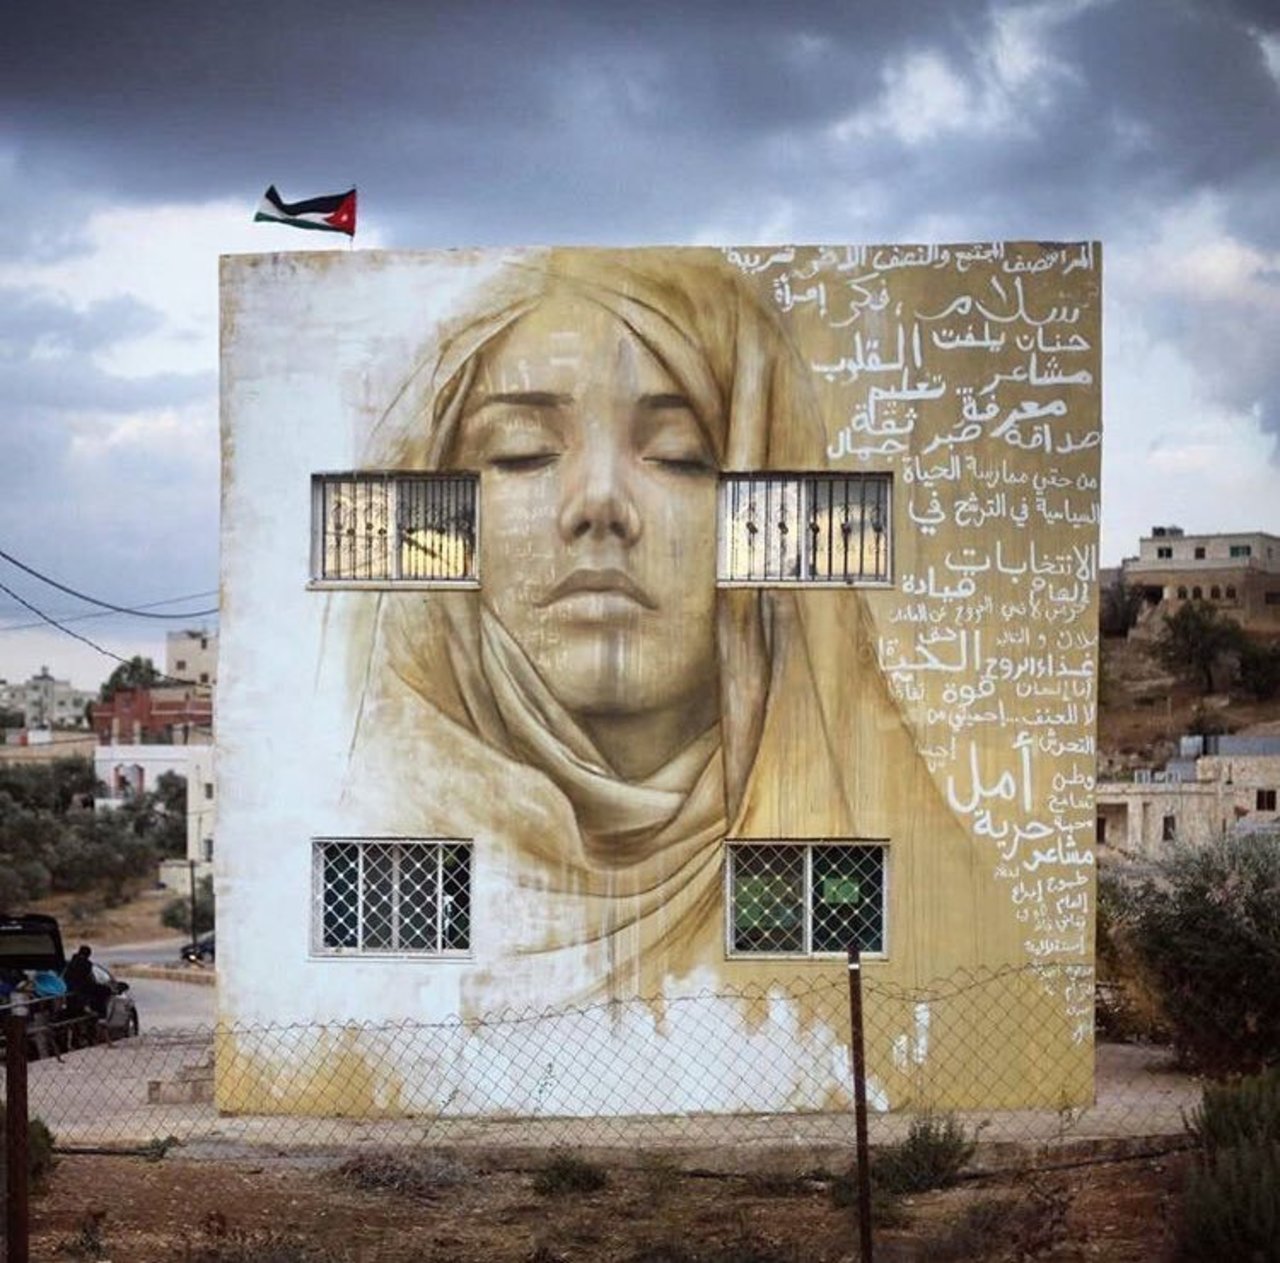 #mural by Jonathan Darby #Jordan #art #graffiti #streetart https://t.co/a739Yo7RH0